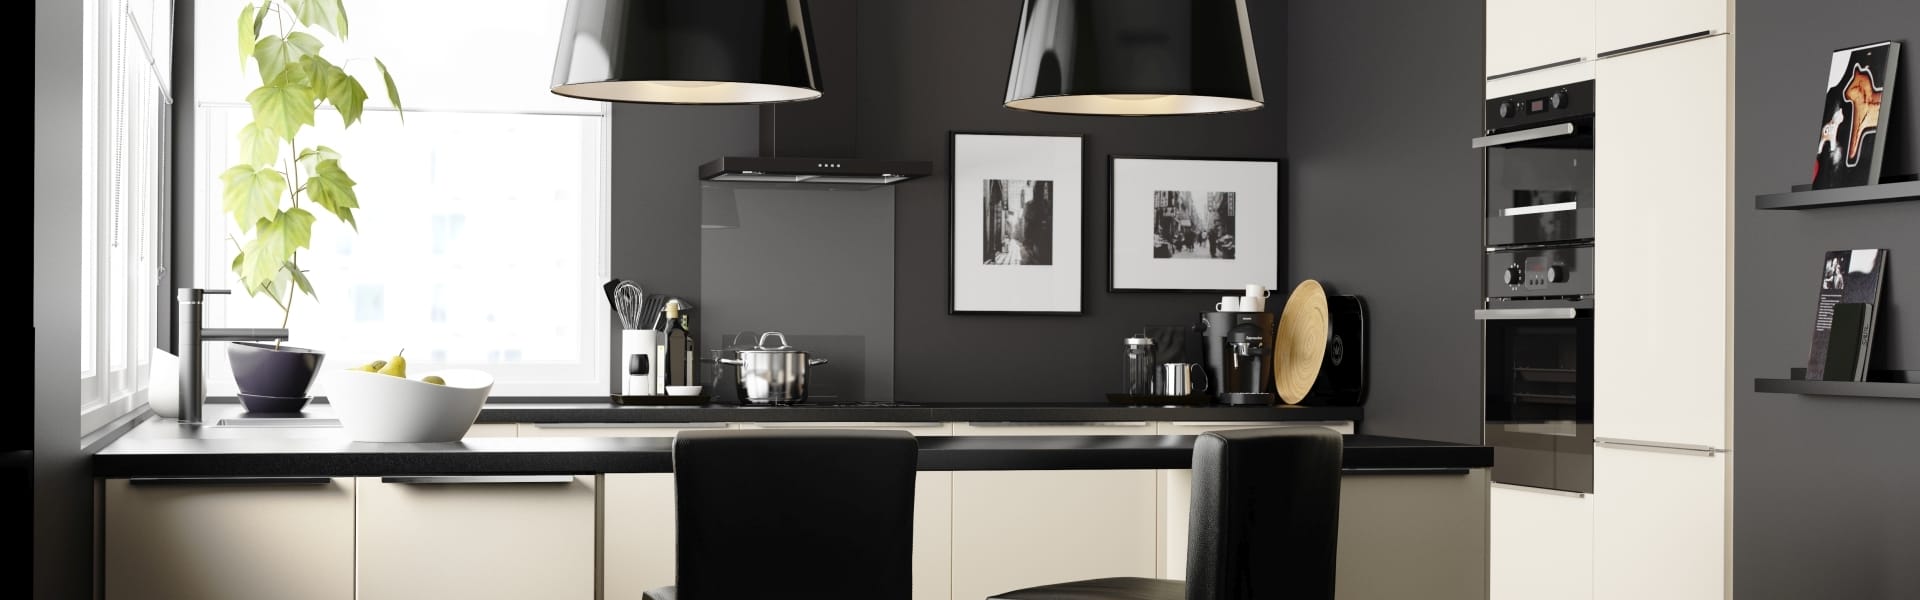 A minimalist black-and-white kitchen